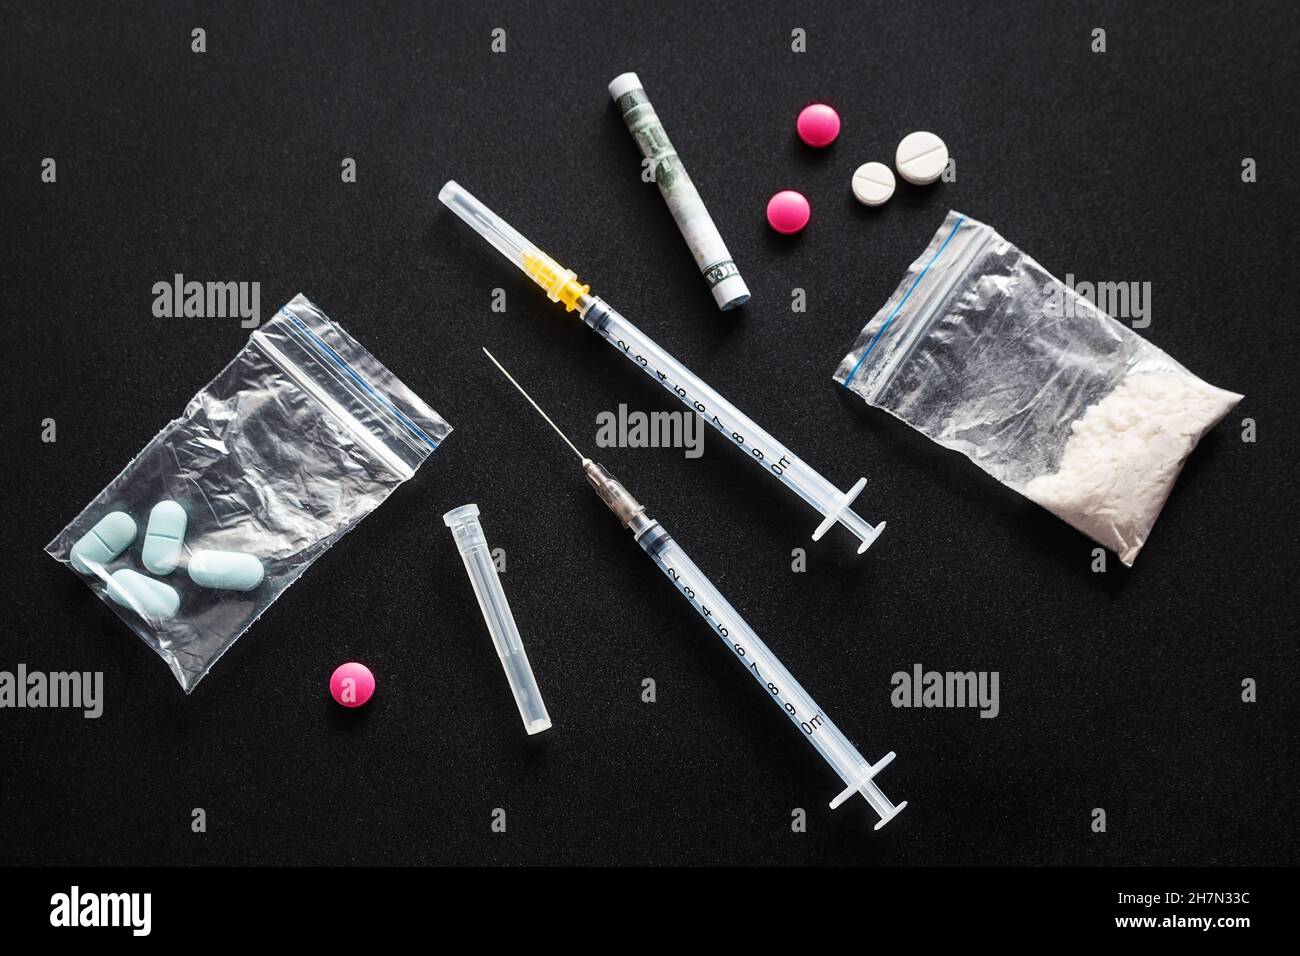 syringes and drugs pills on black background Stock Photo